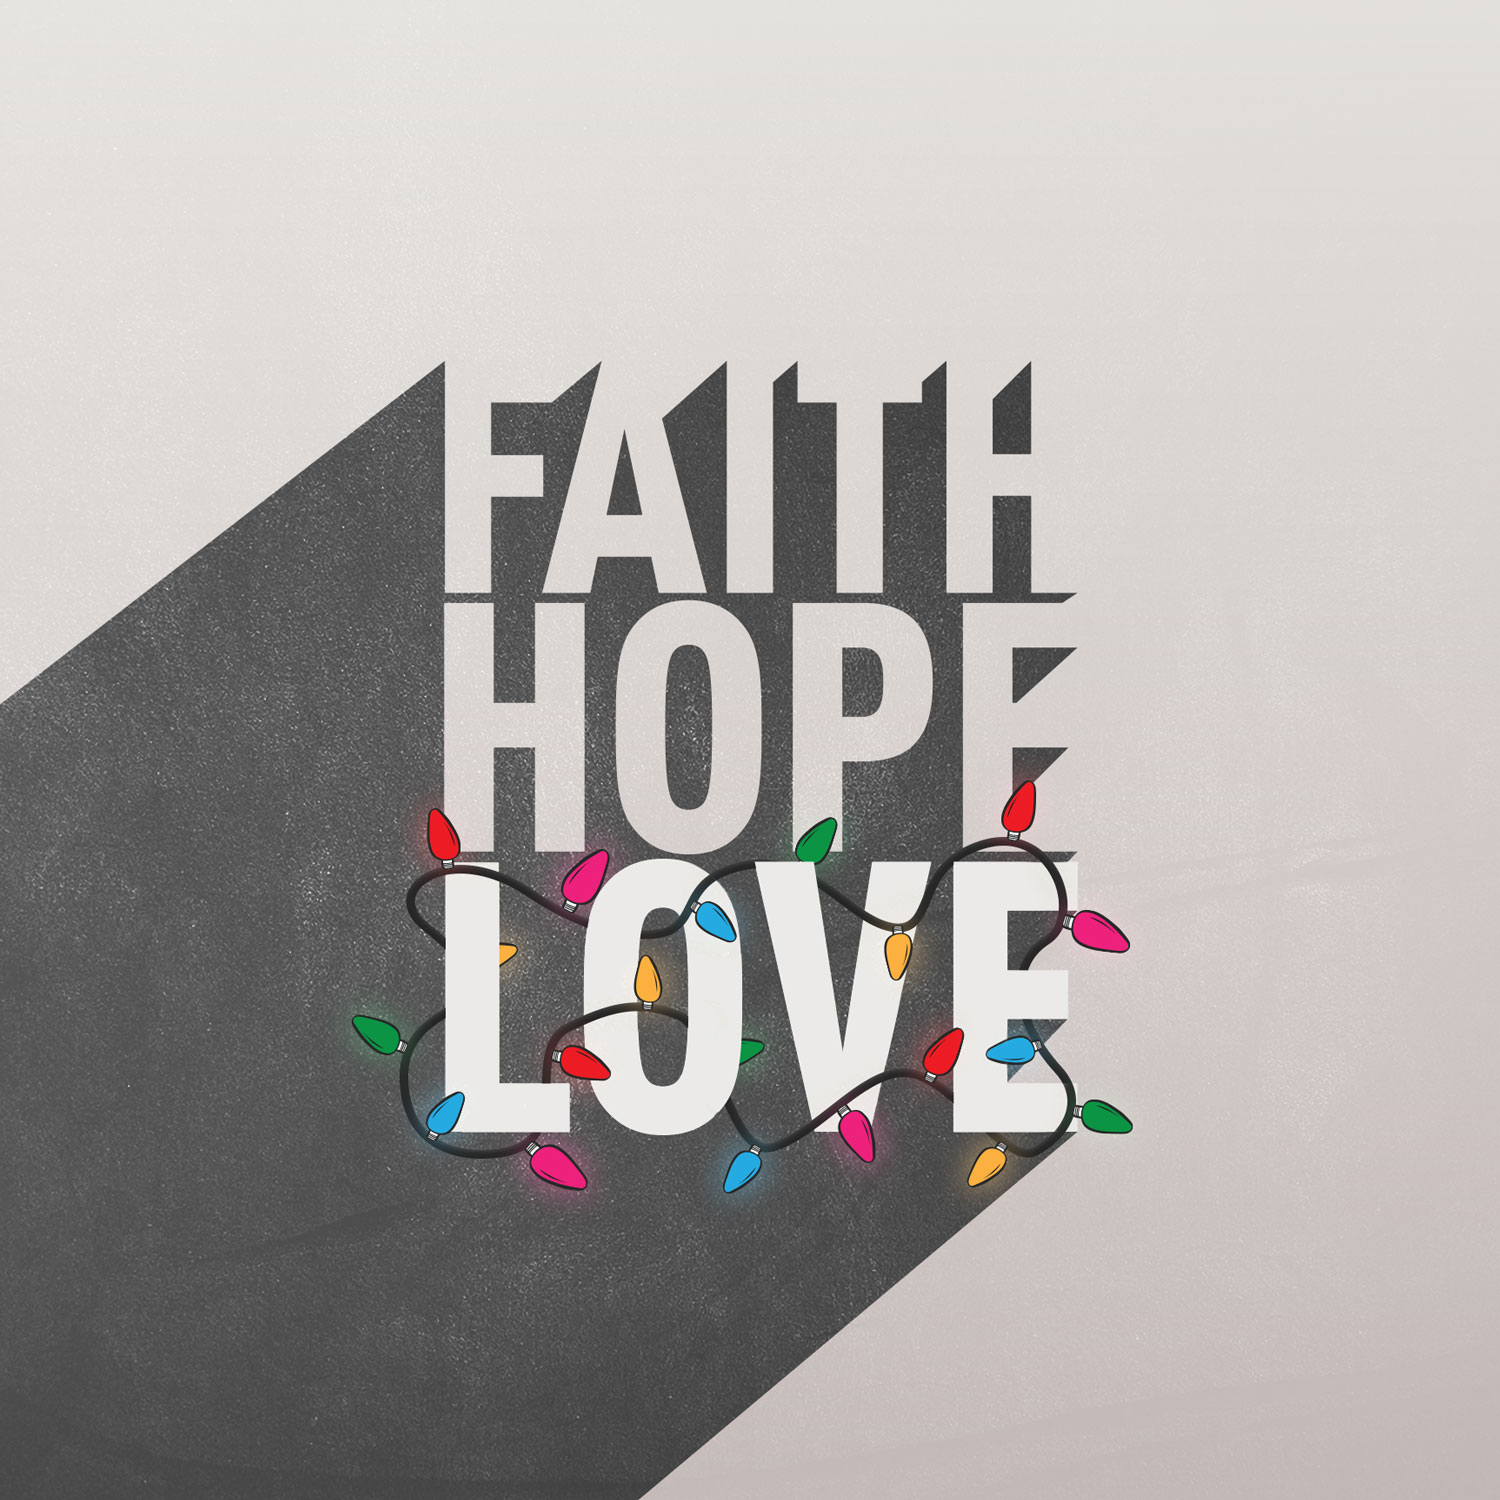 essay about faith hope and love